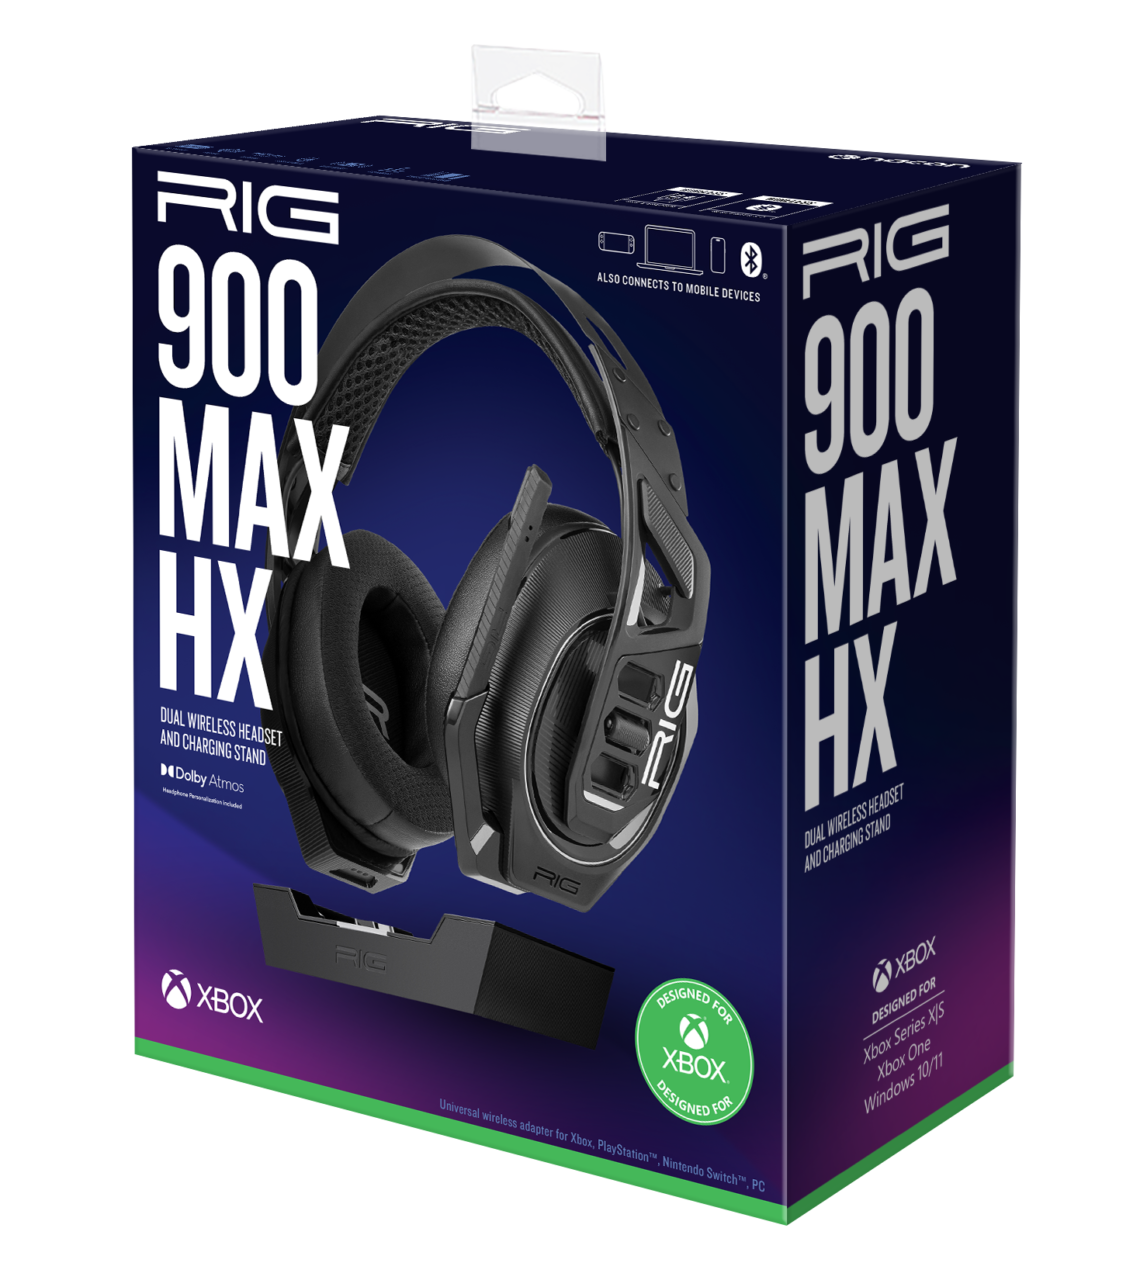 RIG 900 MAX HX Definitive Wireless Gaming Headset Box Shot image (NACON)